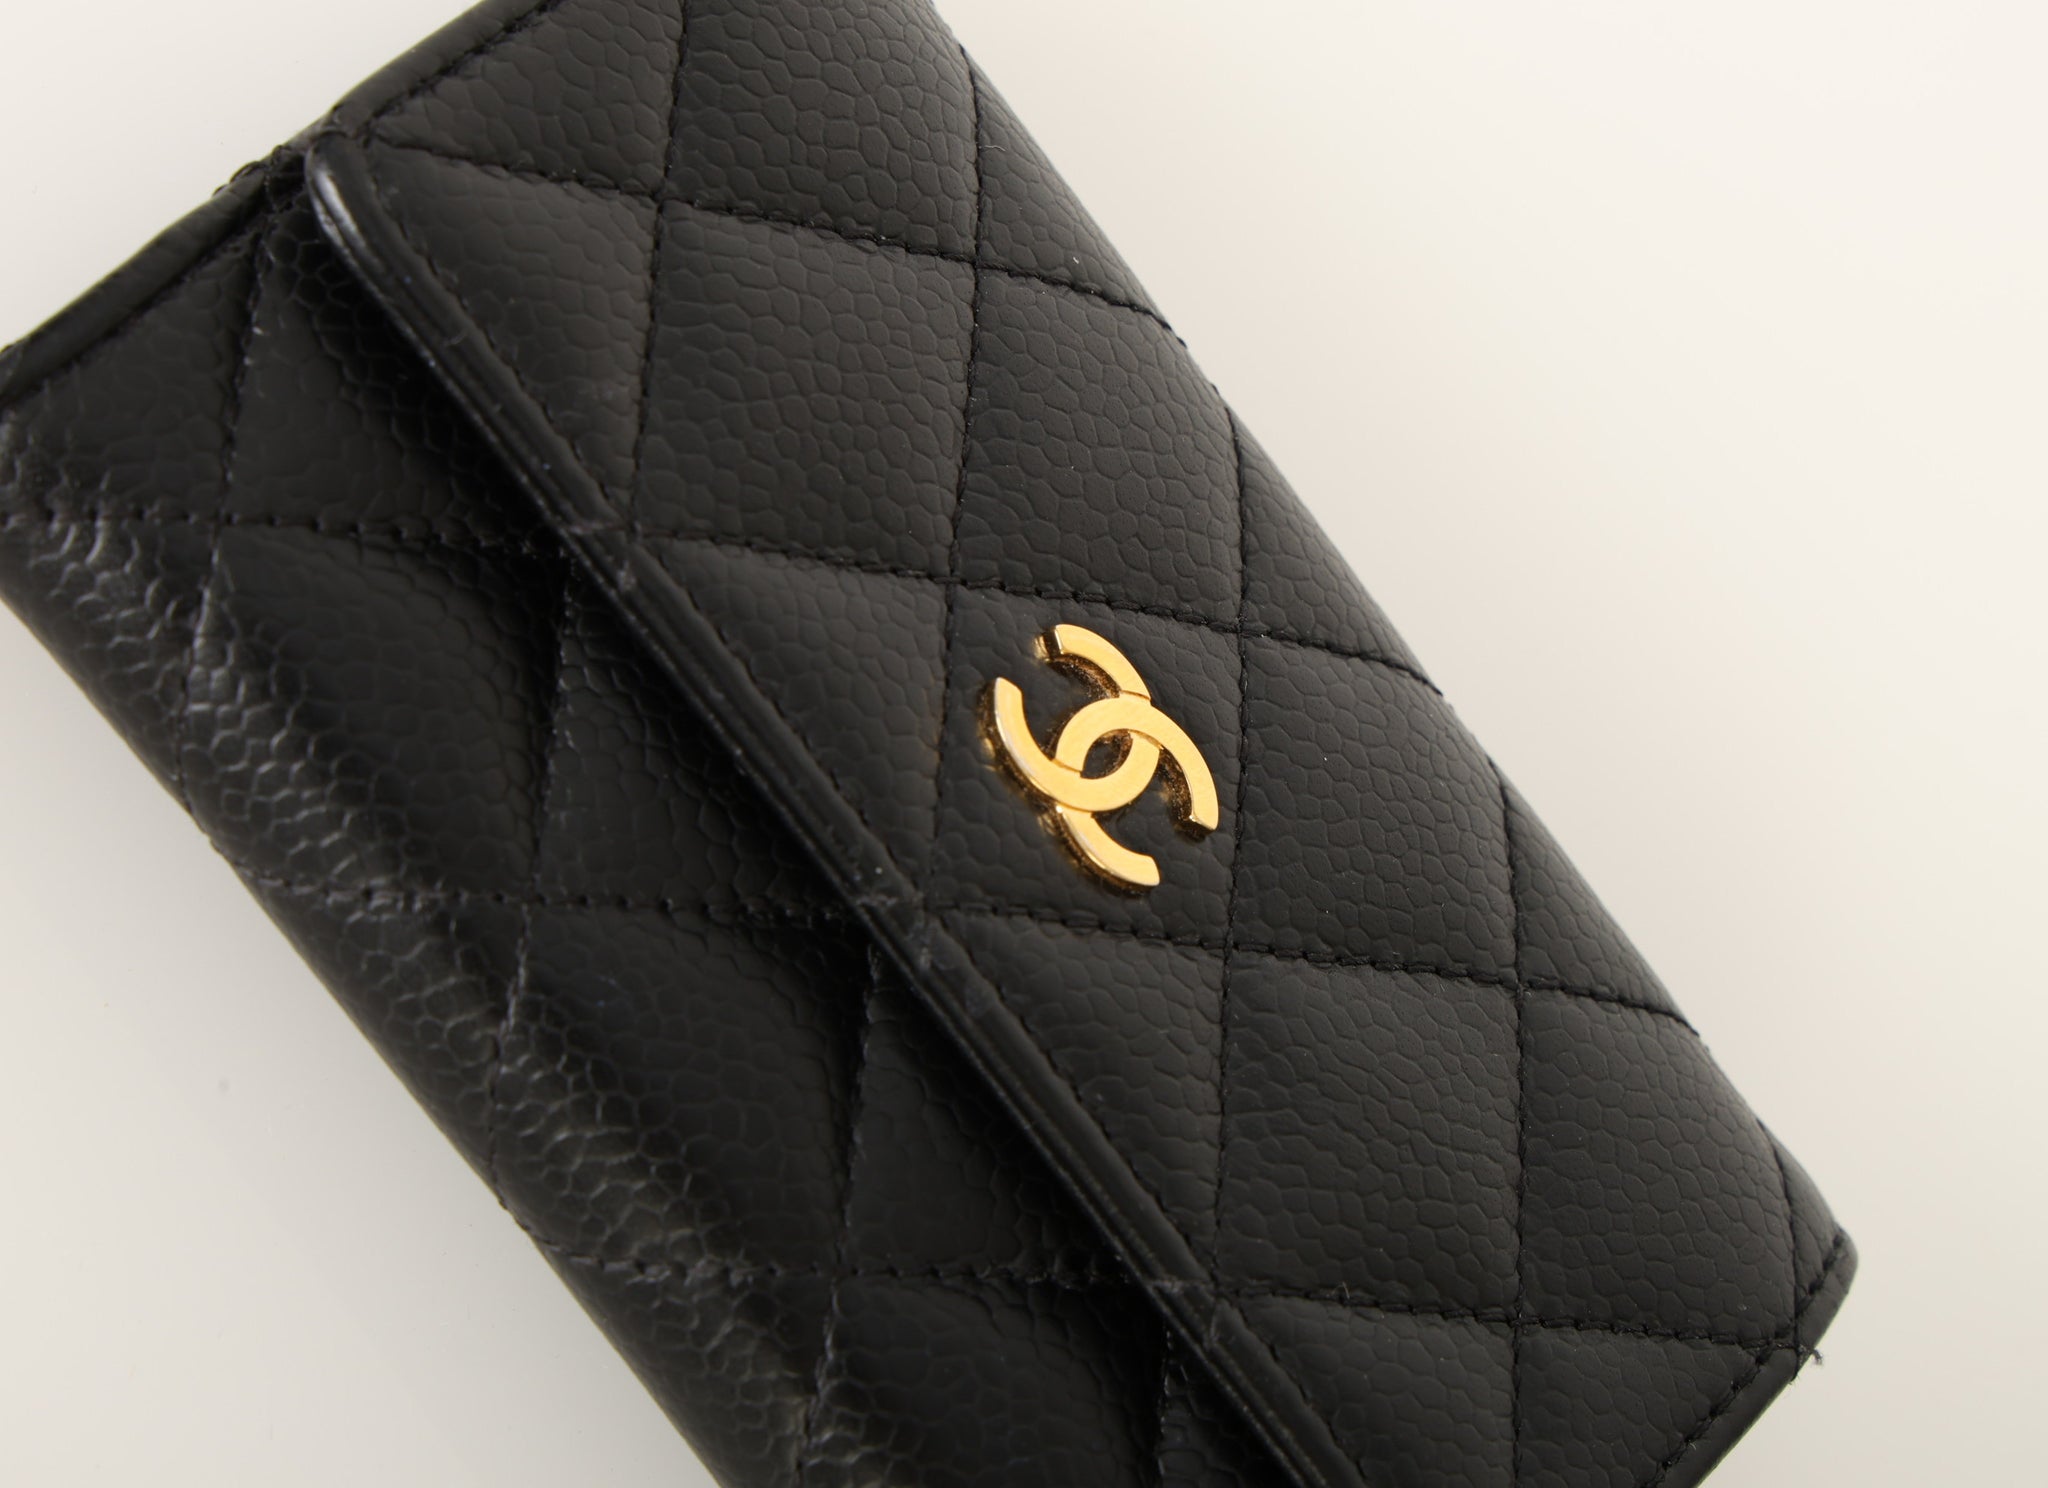 Chanel 2015 Caviar Cardholder w/ Chain